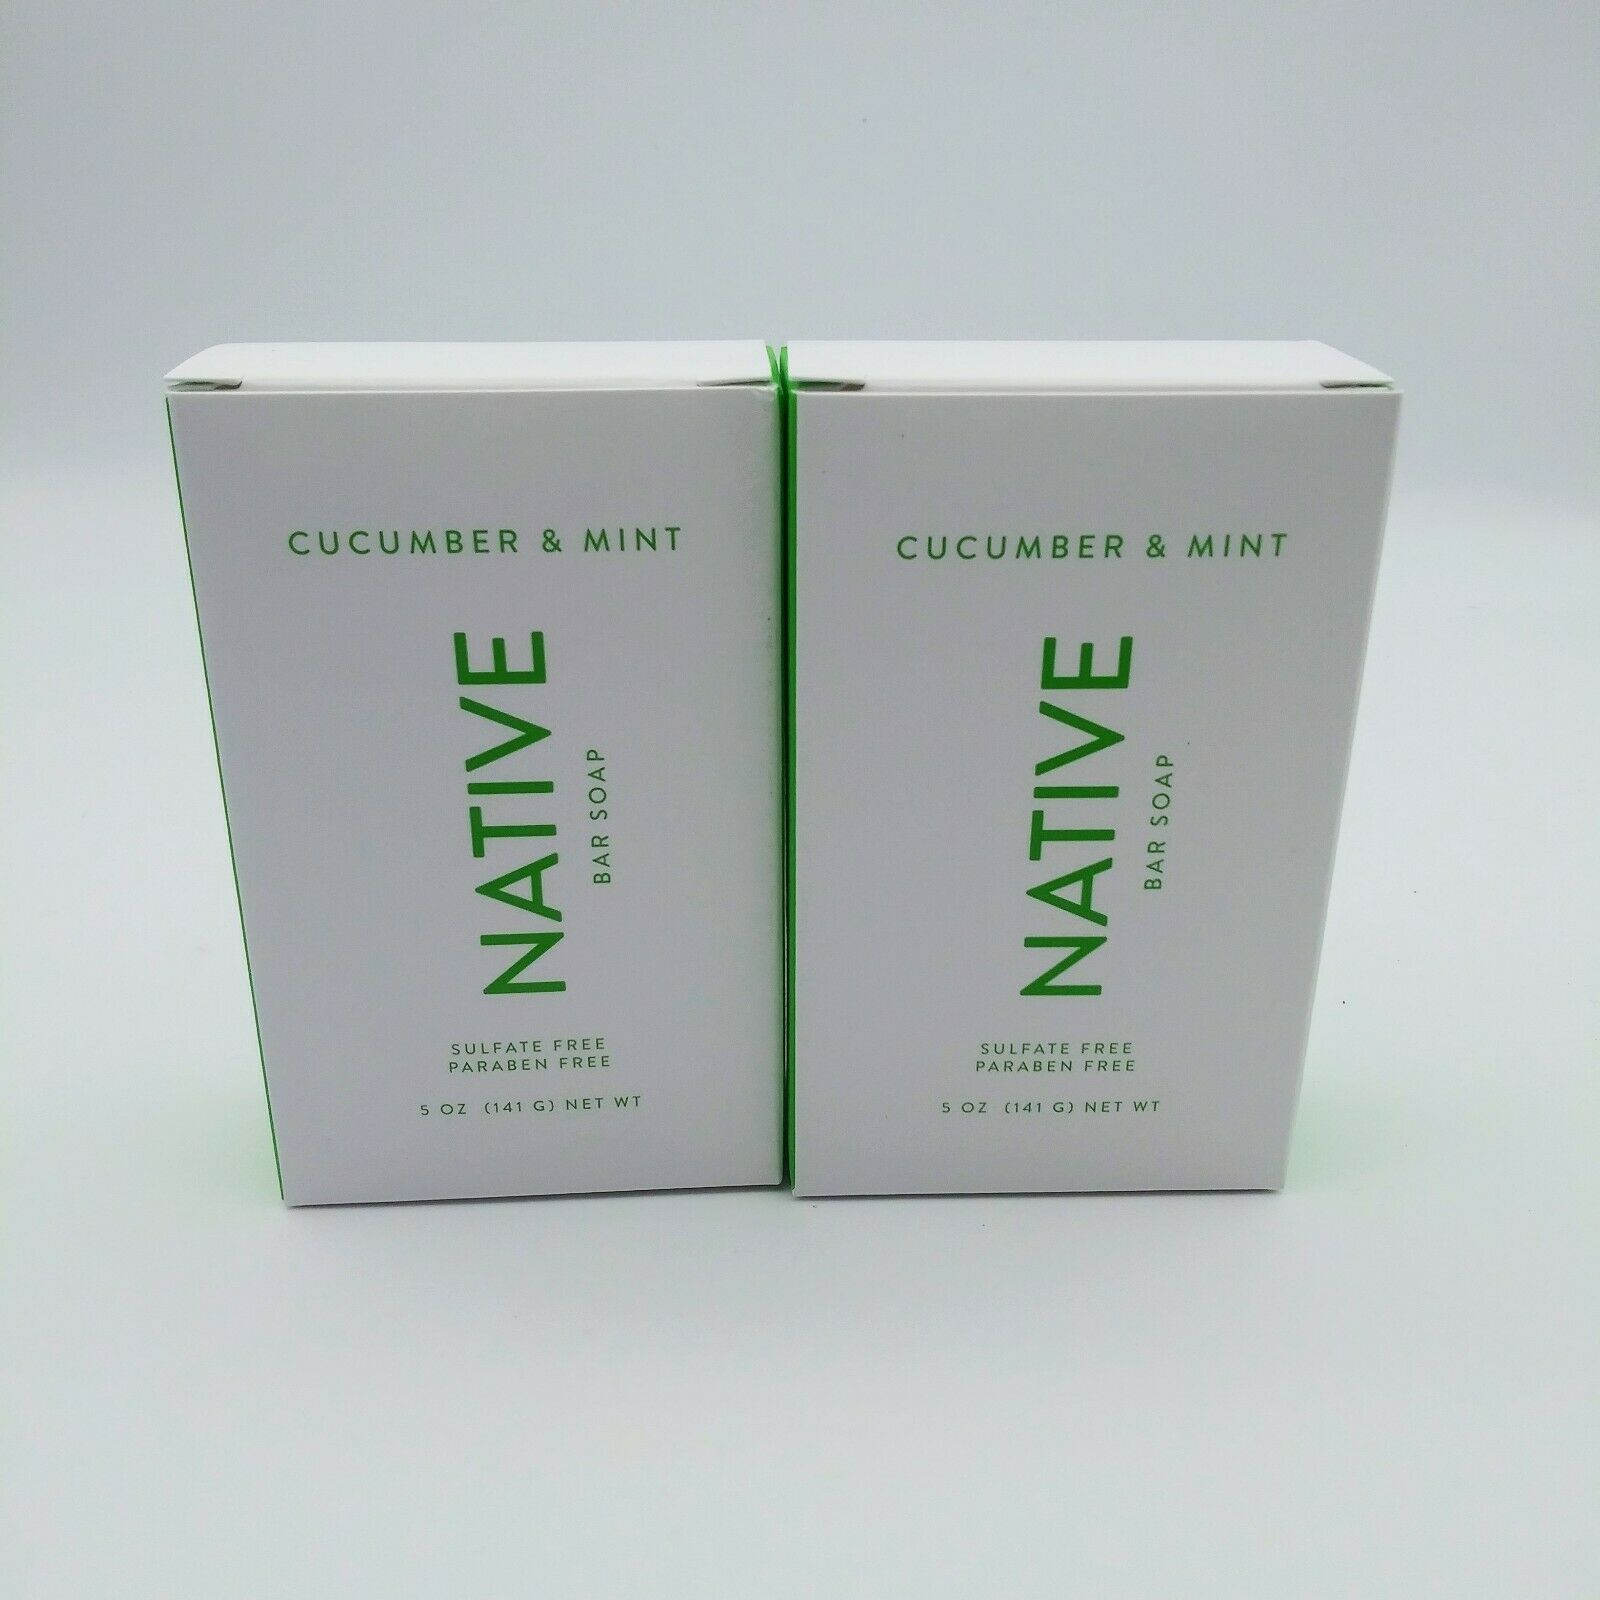 NATIVE Paraben Sulfate Free Cucumber & Mint Deodorant 2 Pack 5 OZ EA